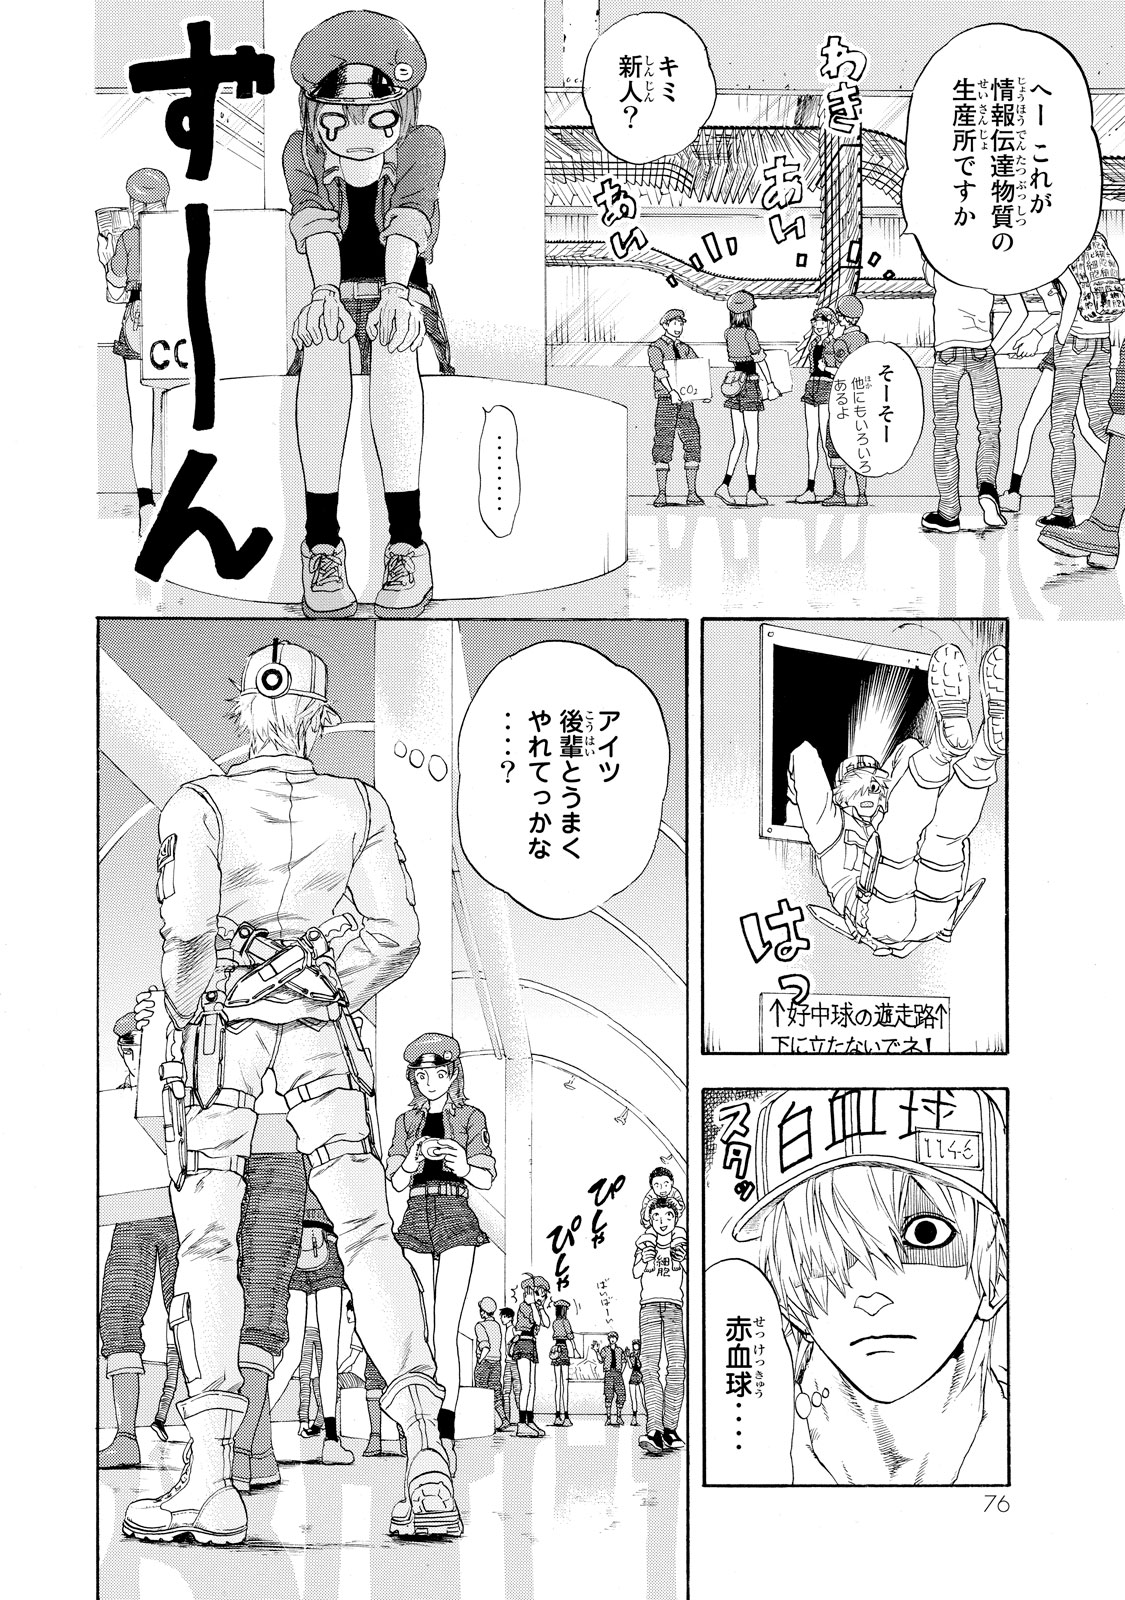 Hataraku Saibou - Chapter 17 - Page 12